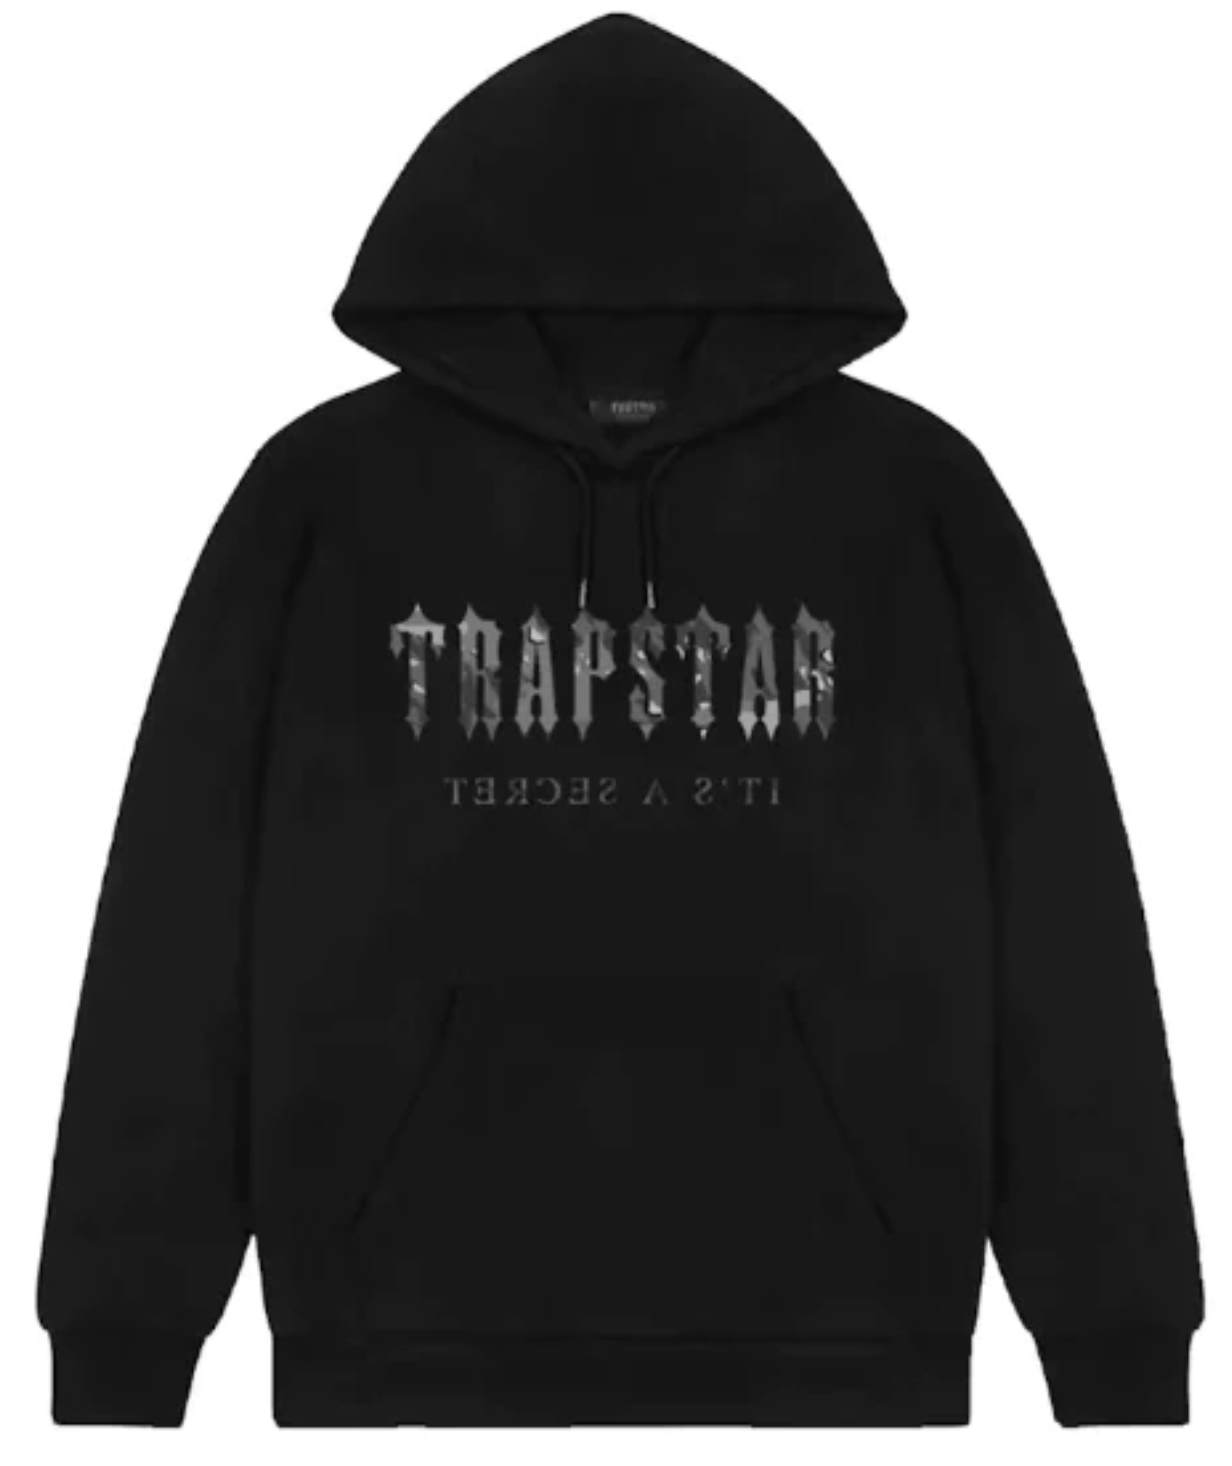 Trapstar Decoded Paisley Monochrome Edition Hoodie Black Grey Showroom NHype Lodz Polska